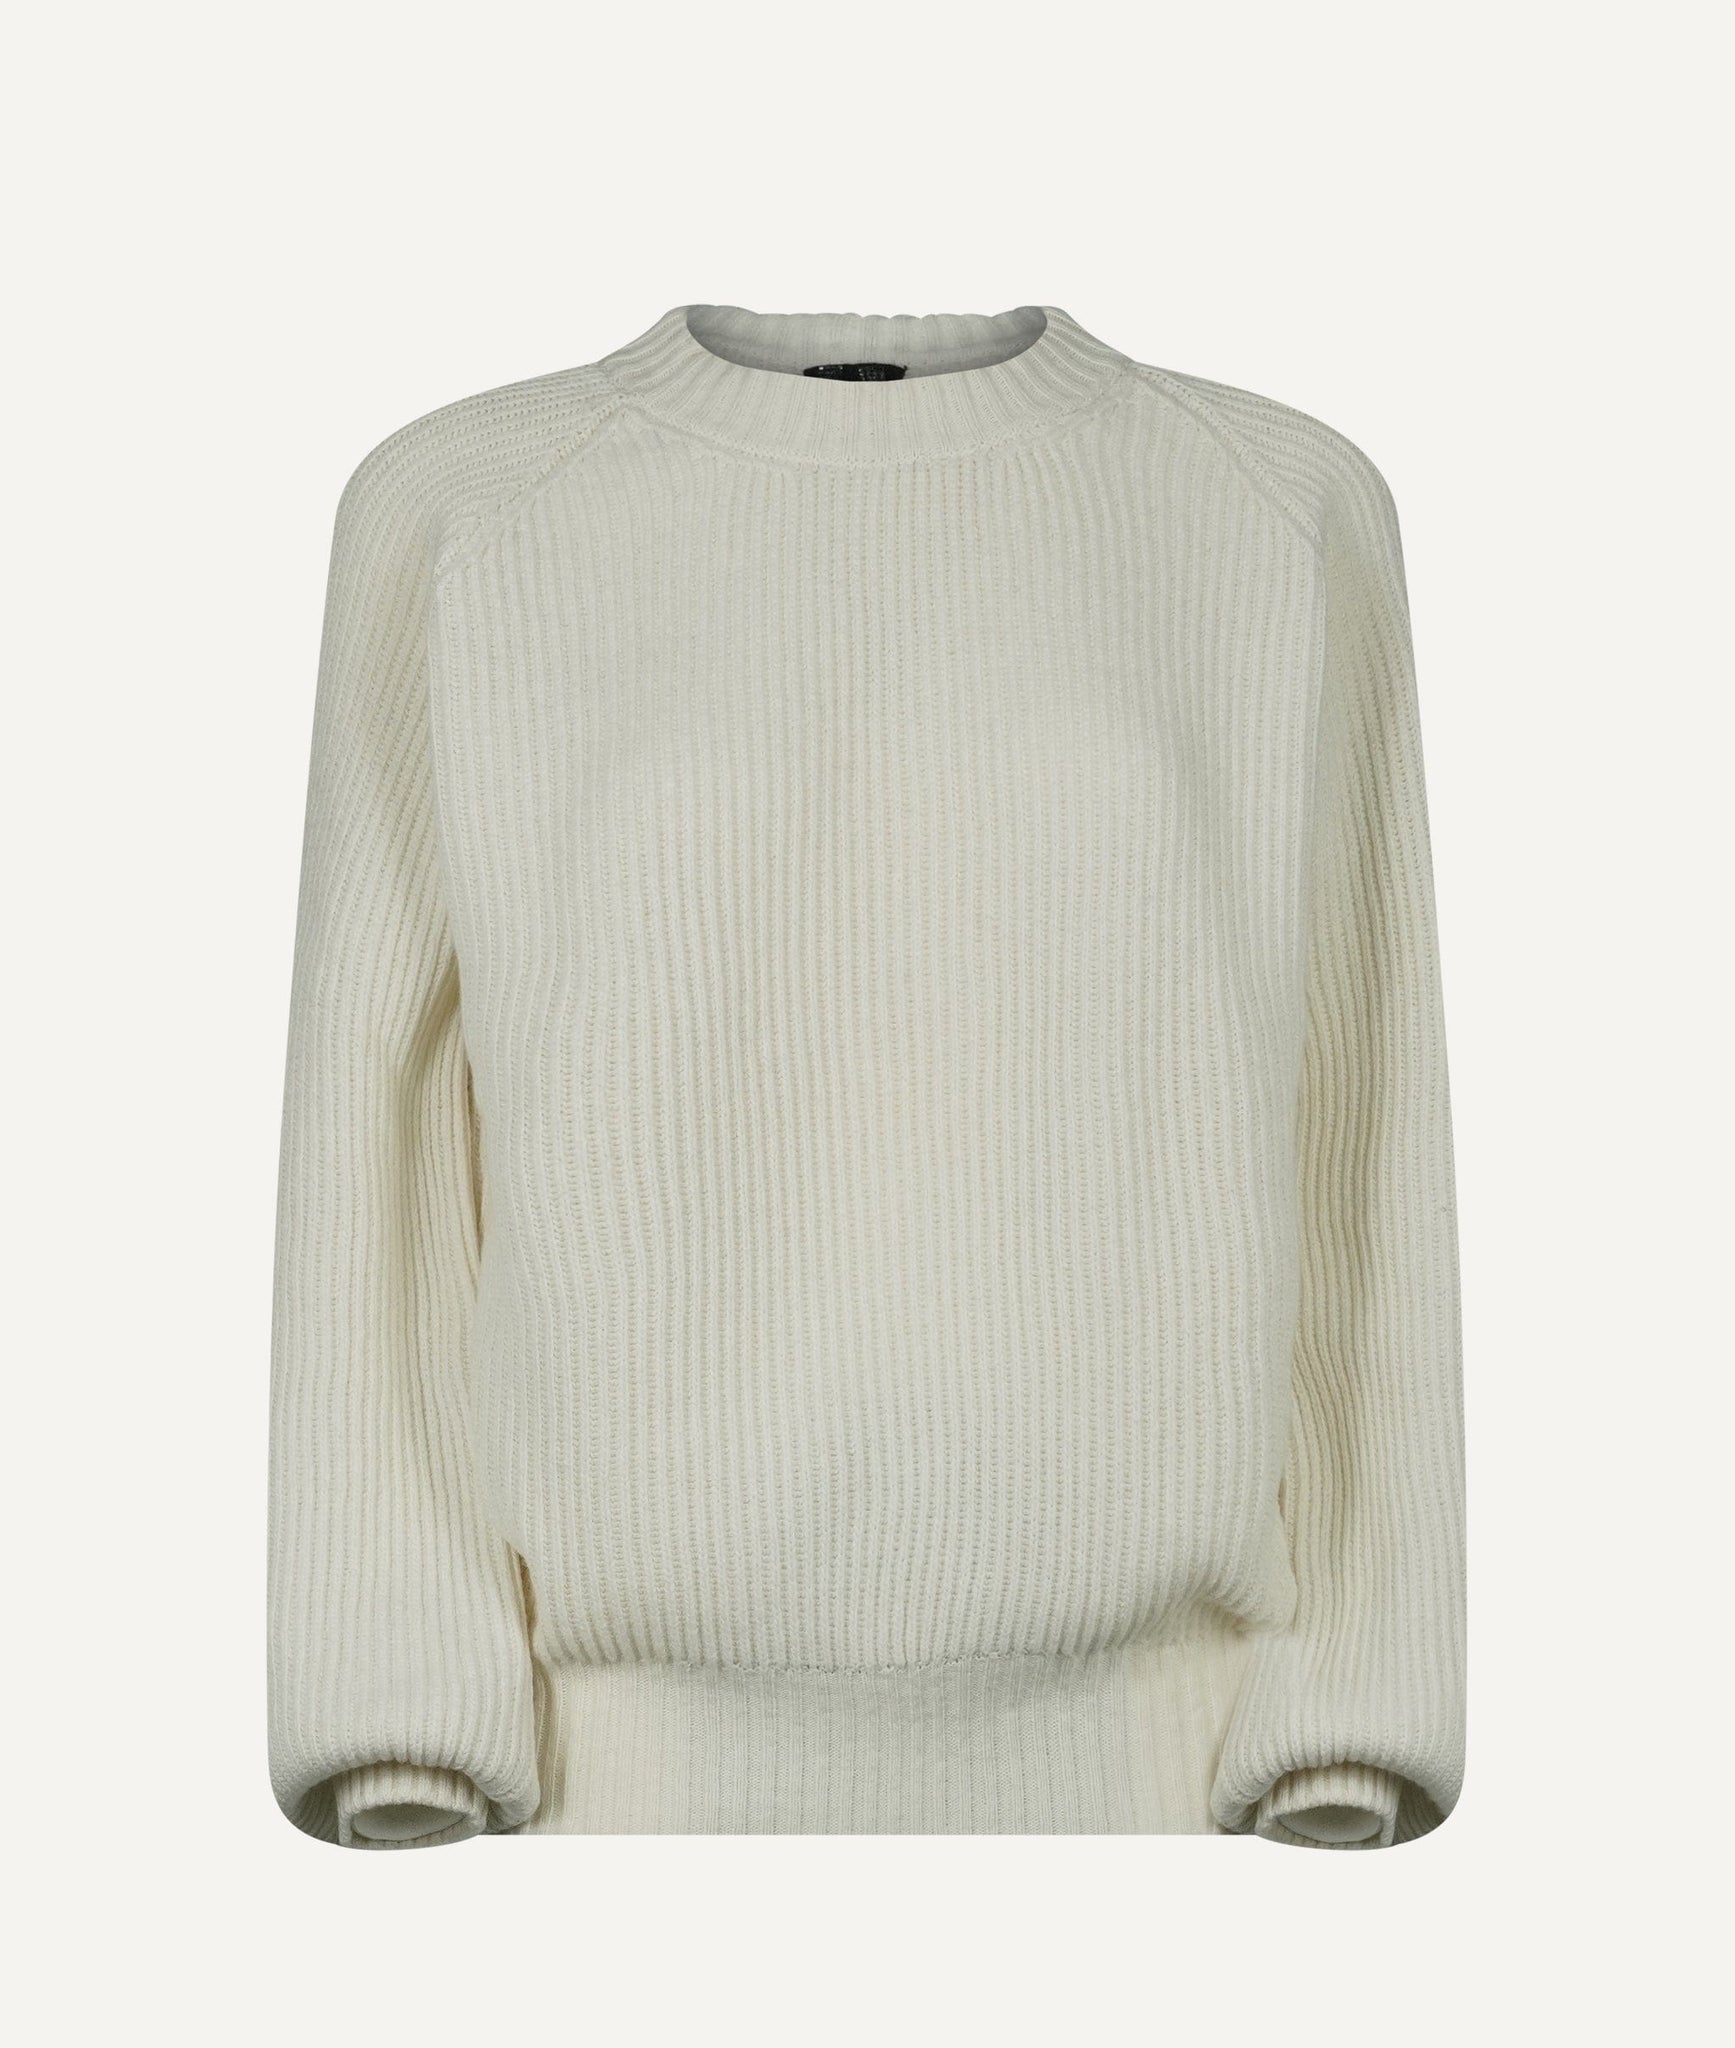 Eleventy - Sweater in Wool, Viscose & Cashmere